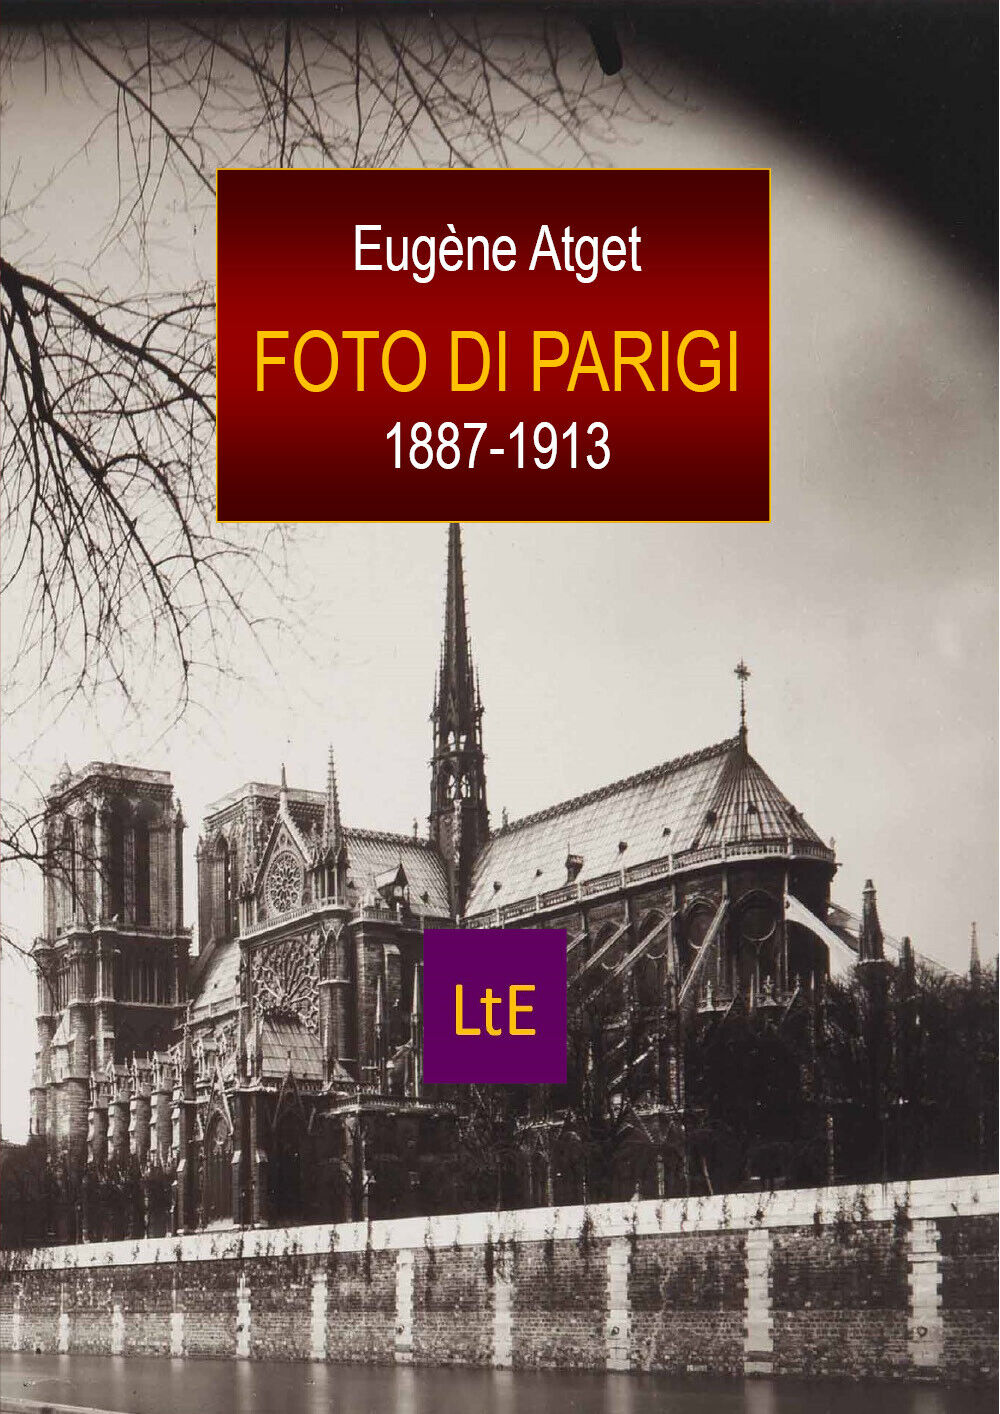 Foto di Parigi 1887-1913. Ediz. illustrata di Eug?ne Atget,  2021,  Latorre-edit libro usato